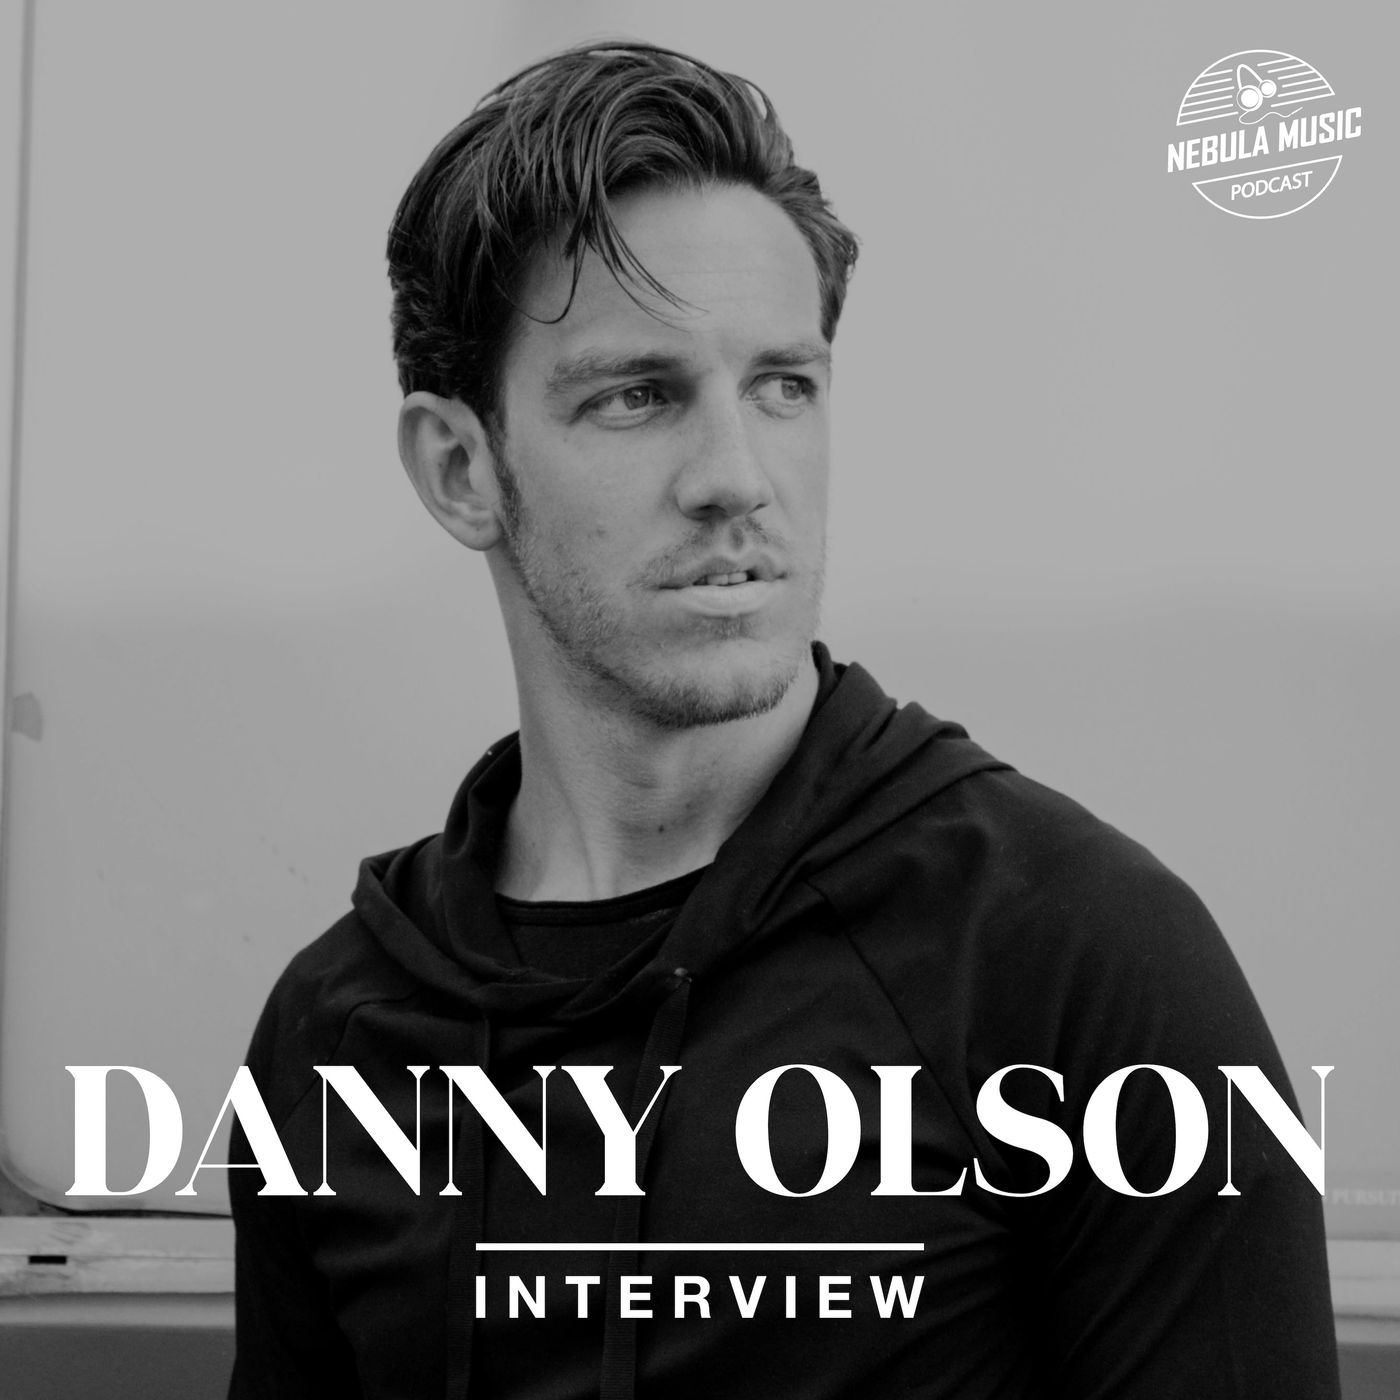 DANNY OLSON INTERVIEW